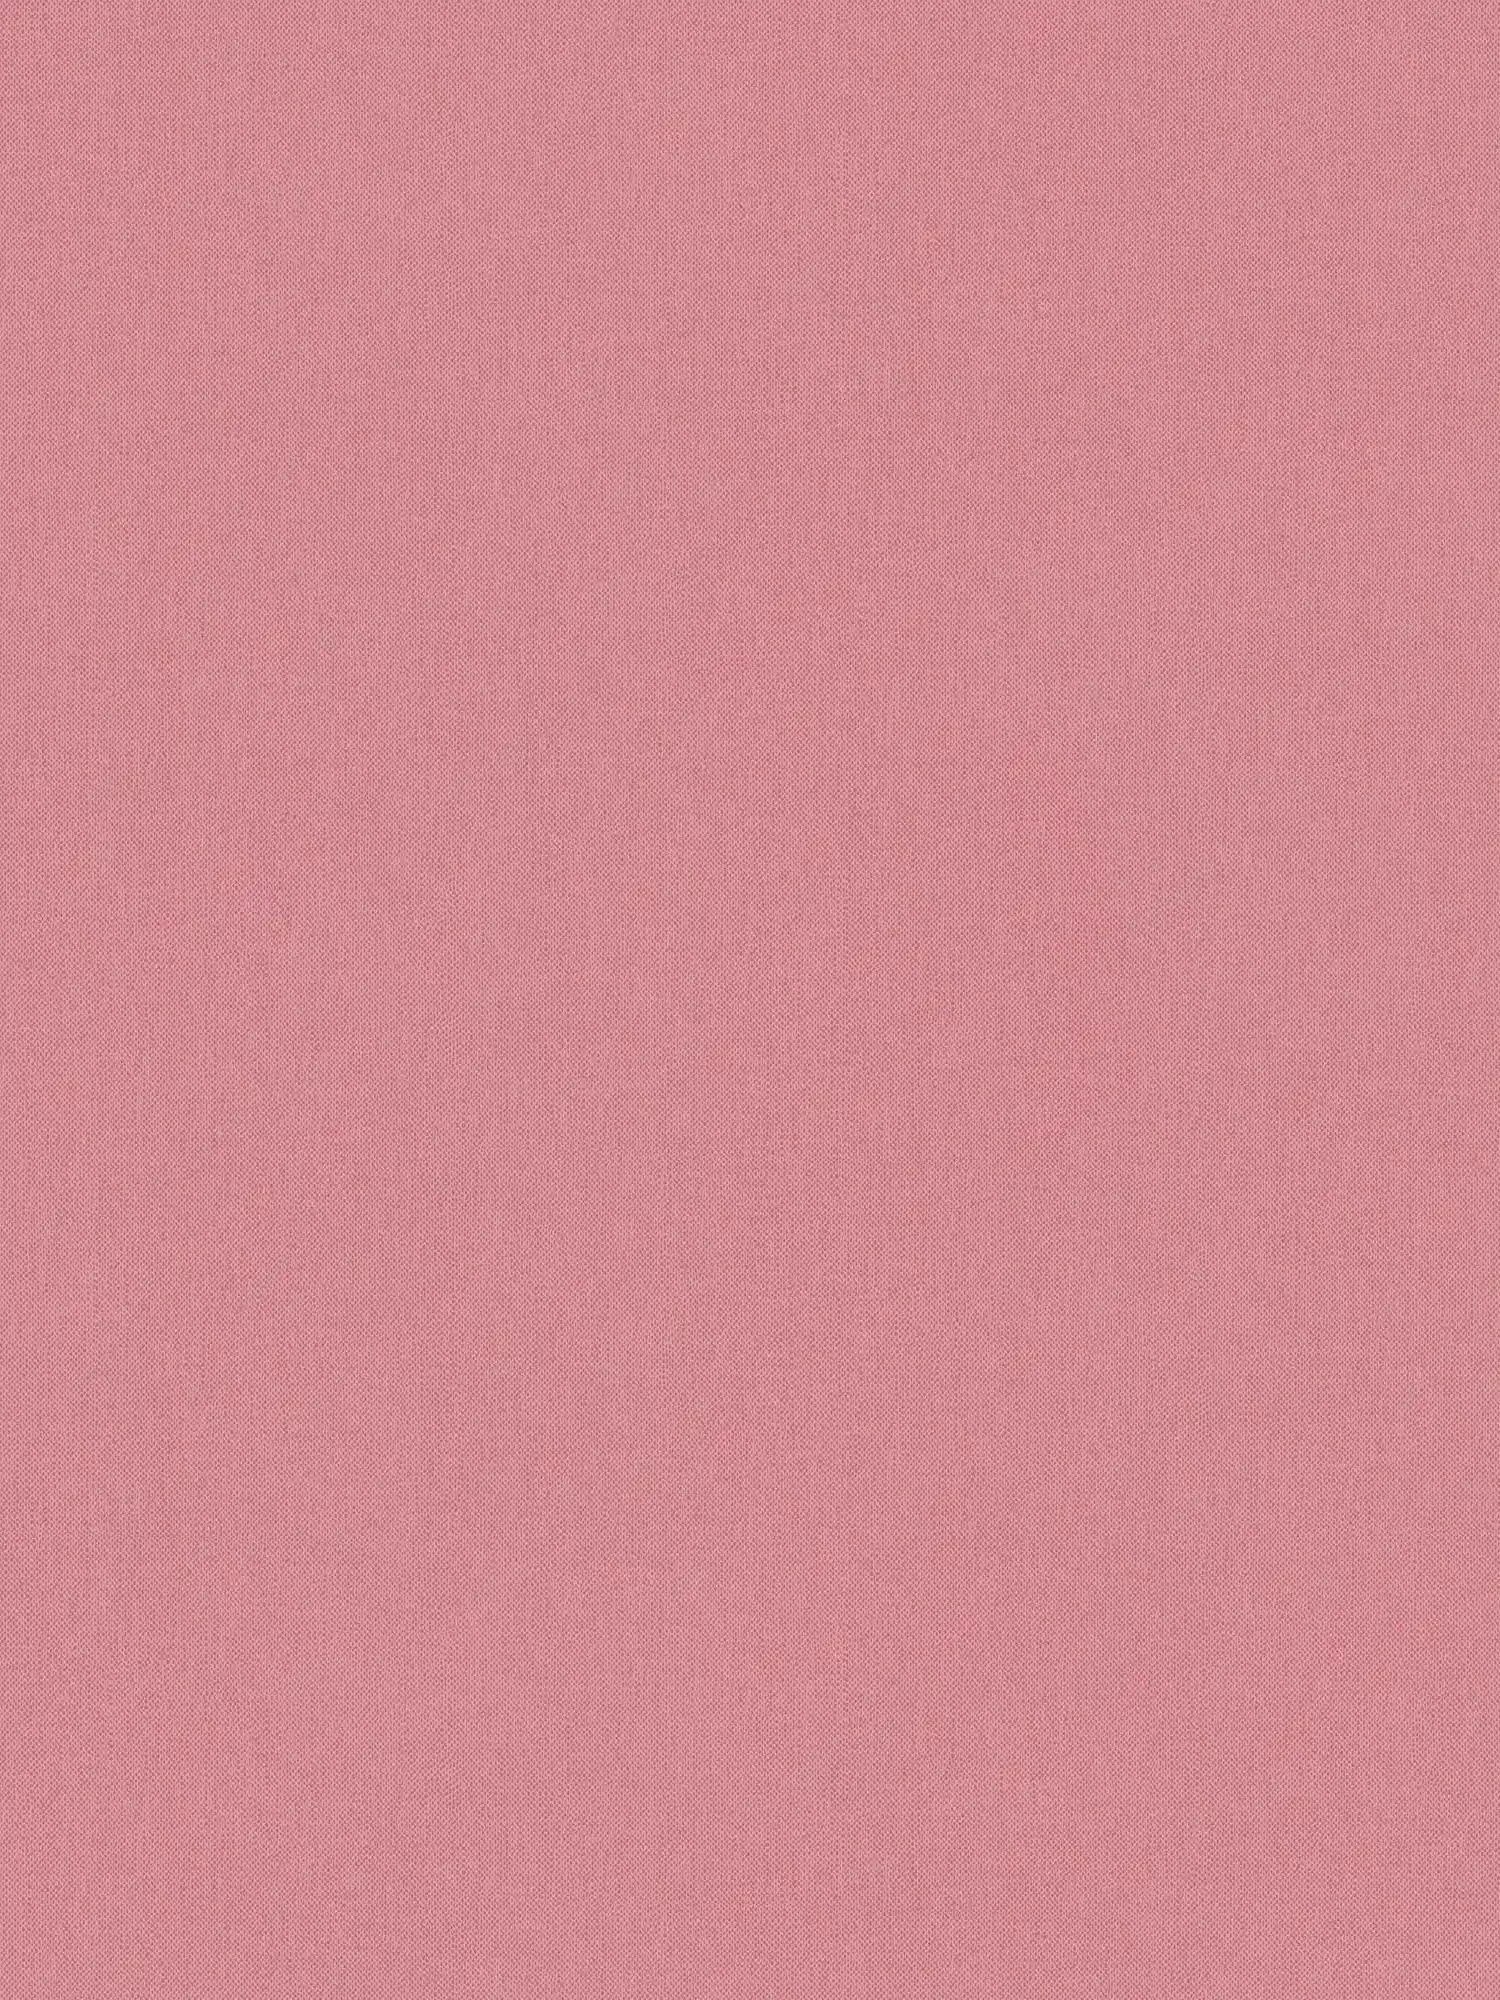 papel pintado rosa viejo uni, superficie mate y estructura textil - rosa
